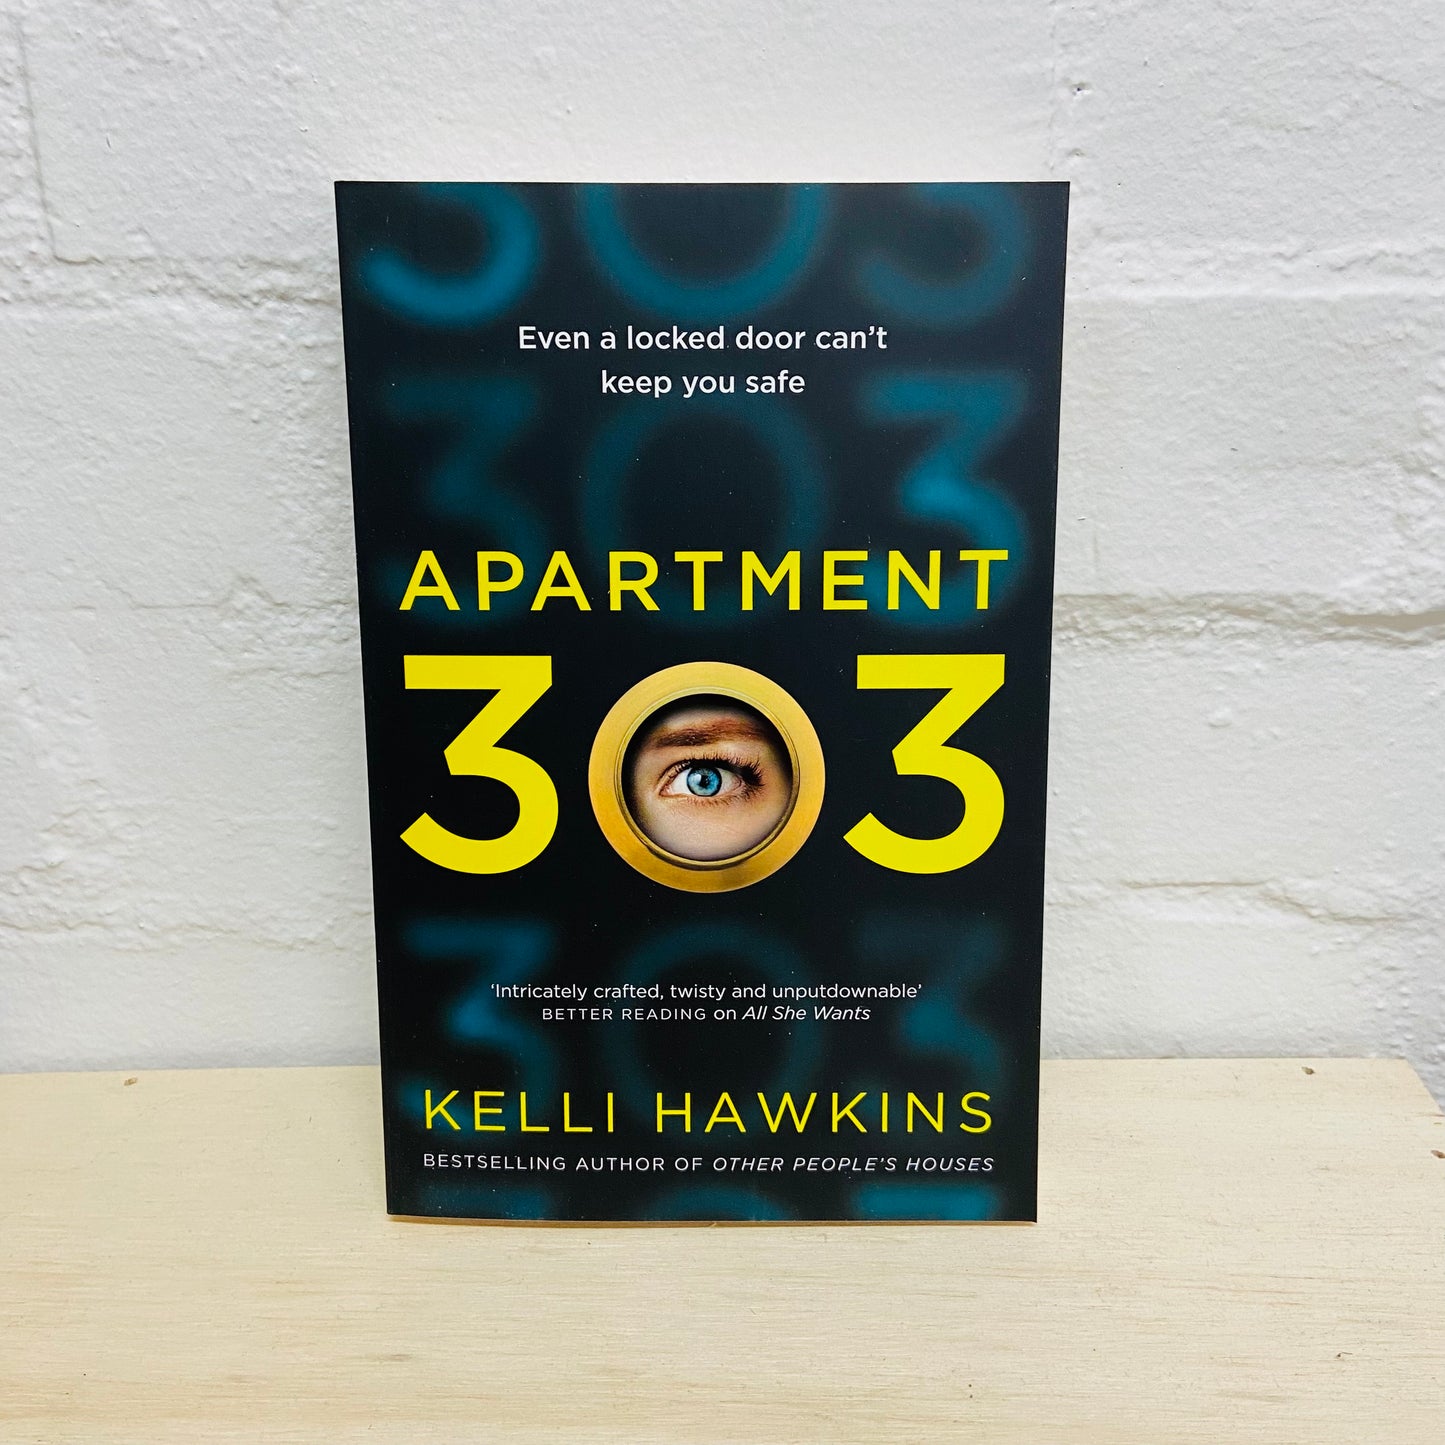 Apartment 303 by Kelli Hawkins